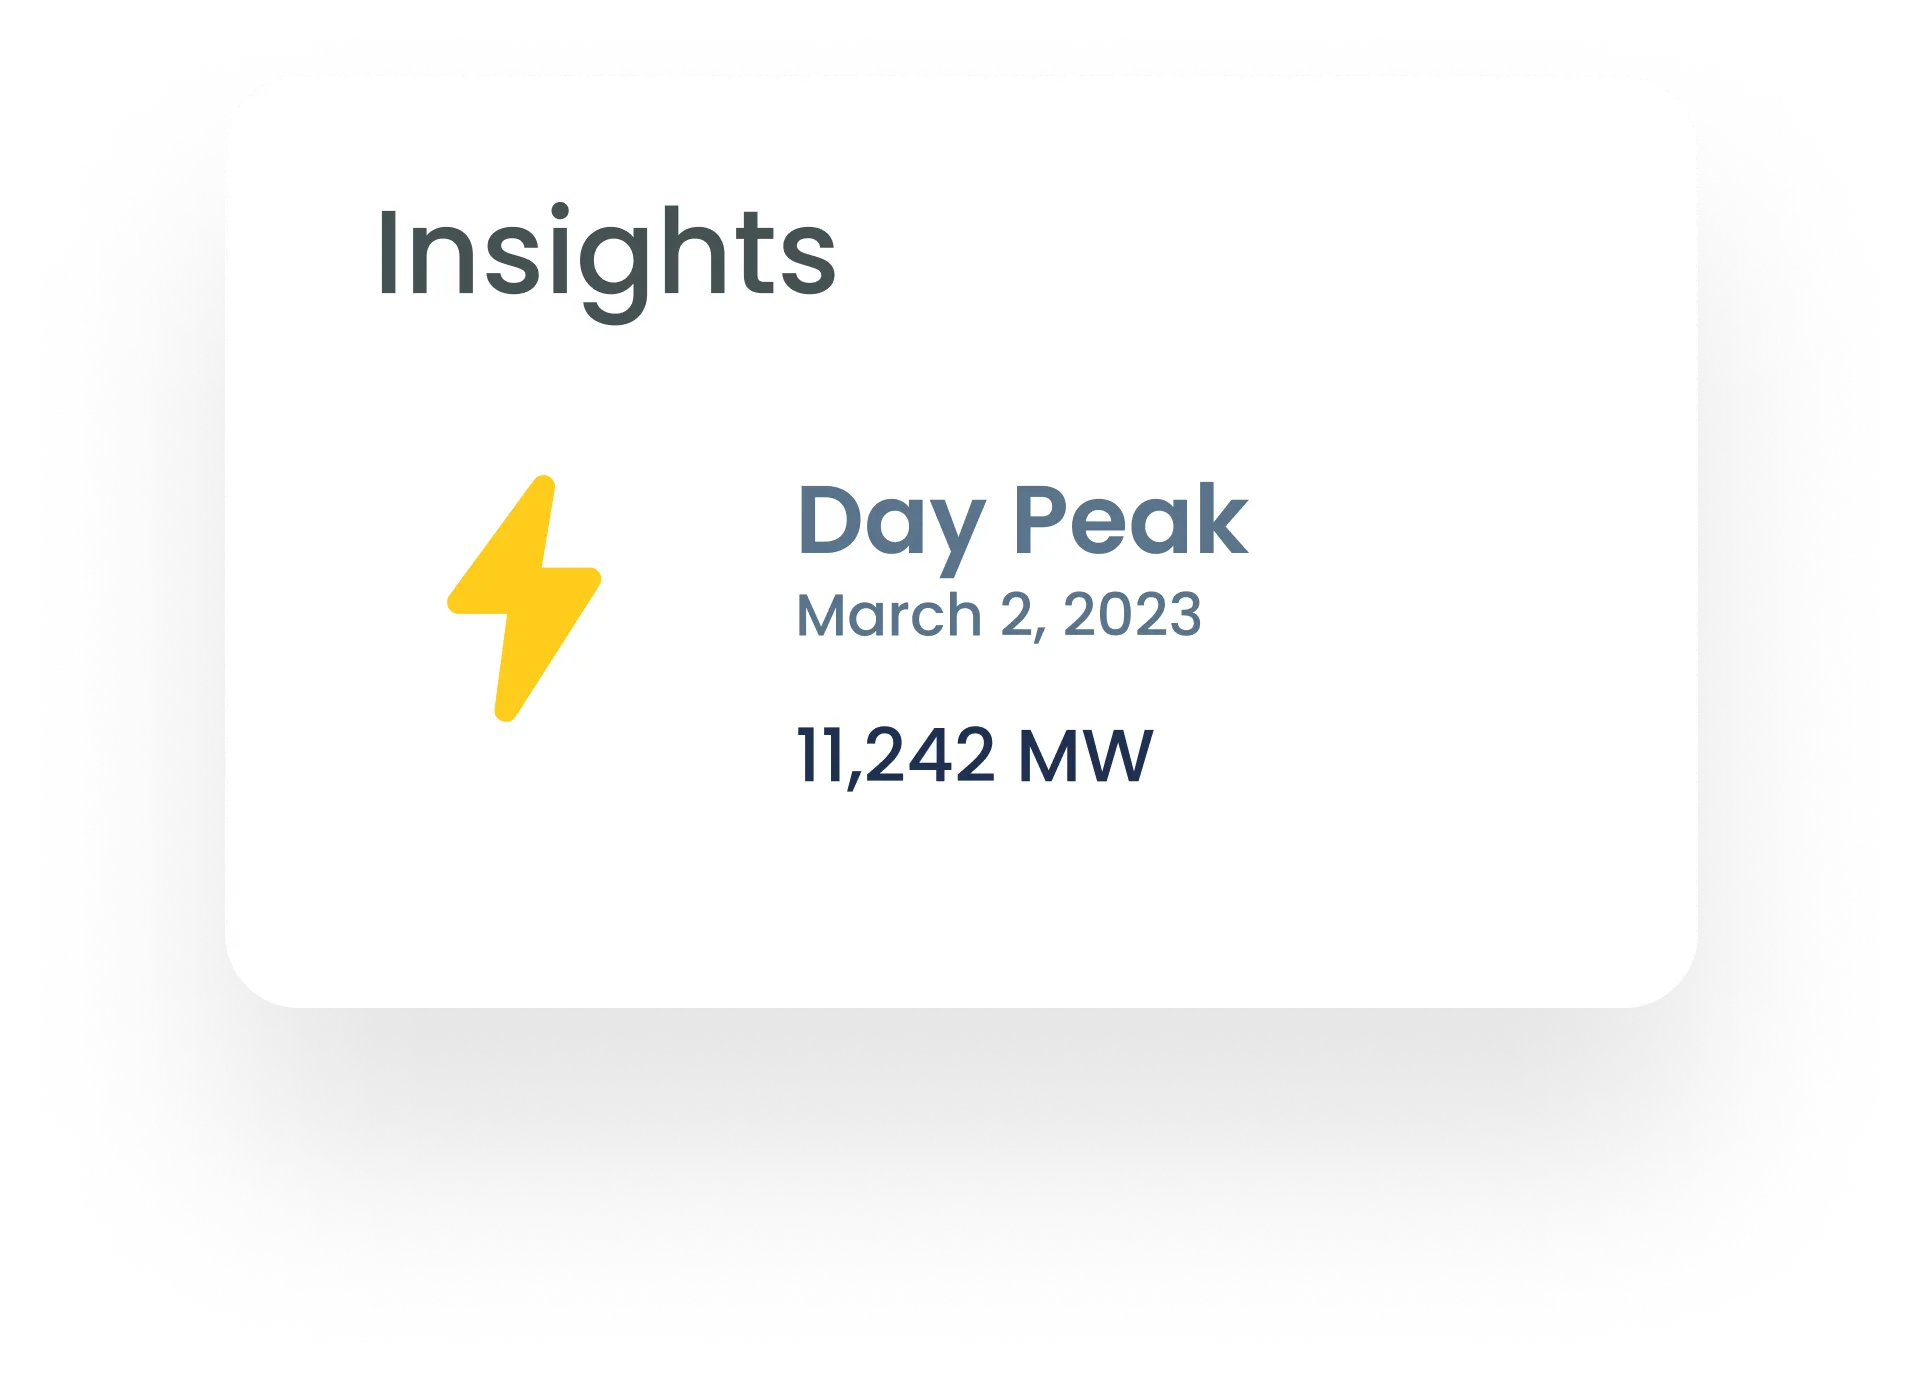 Day Peak Insight Card